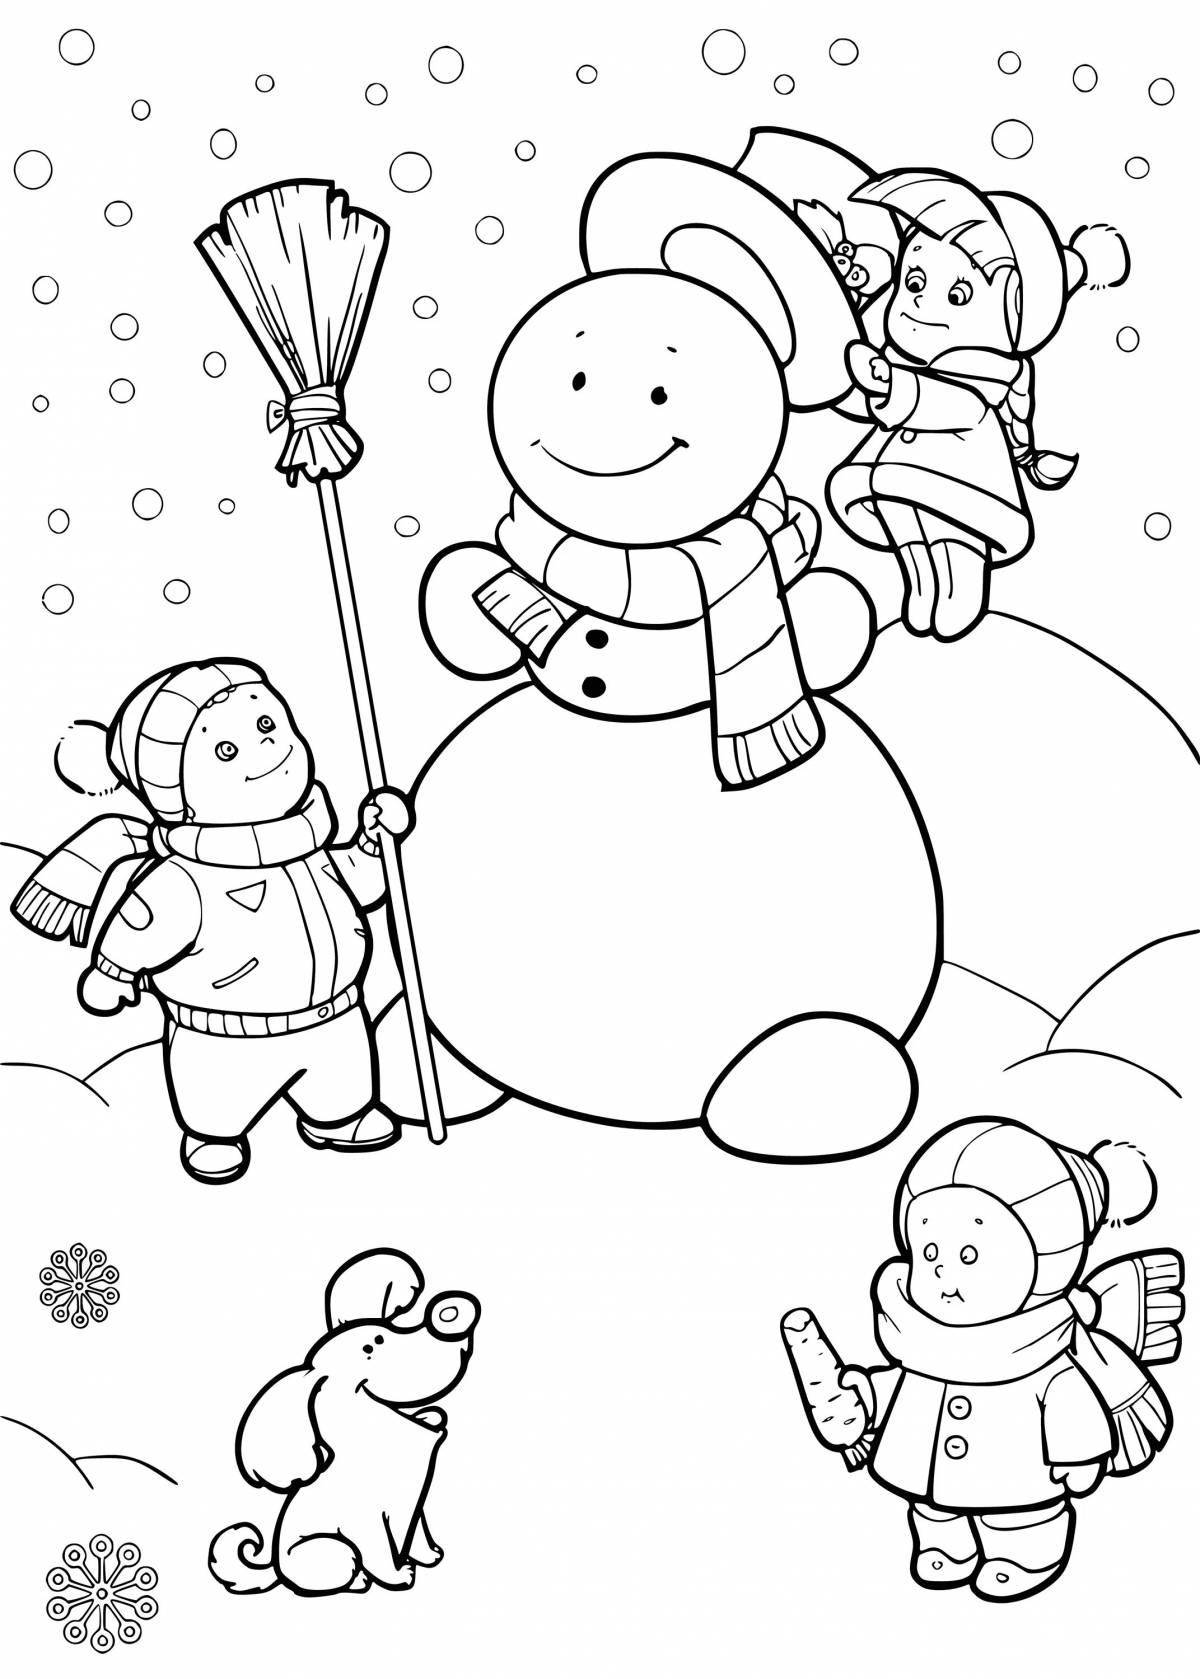 Coloring book joyful snowman simulation